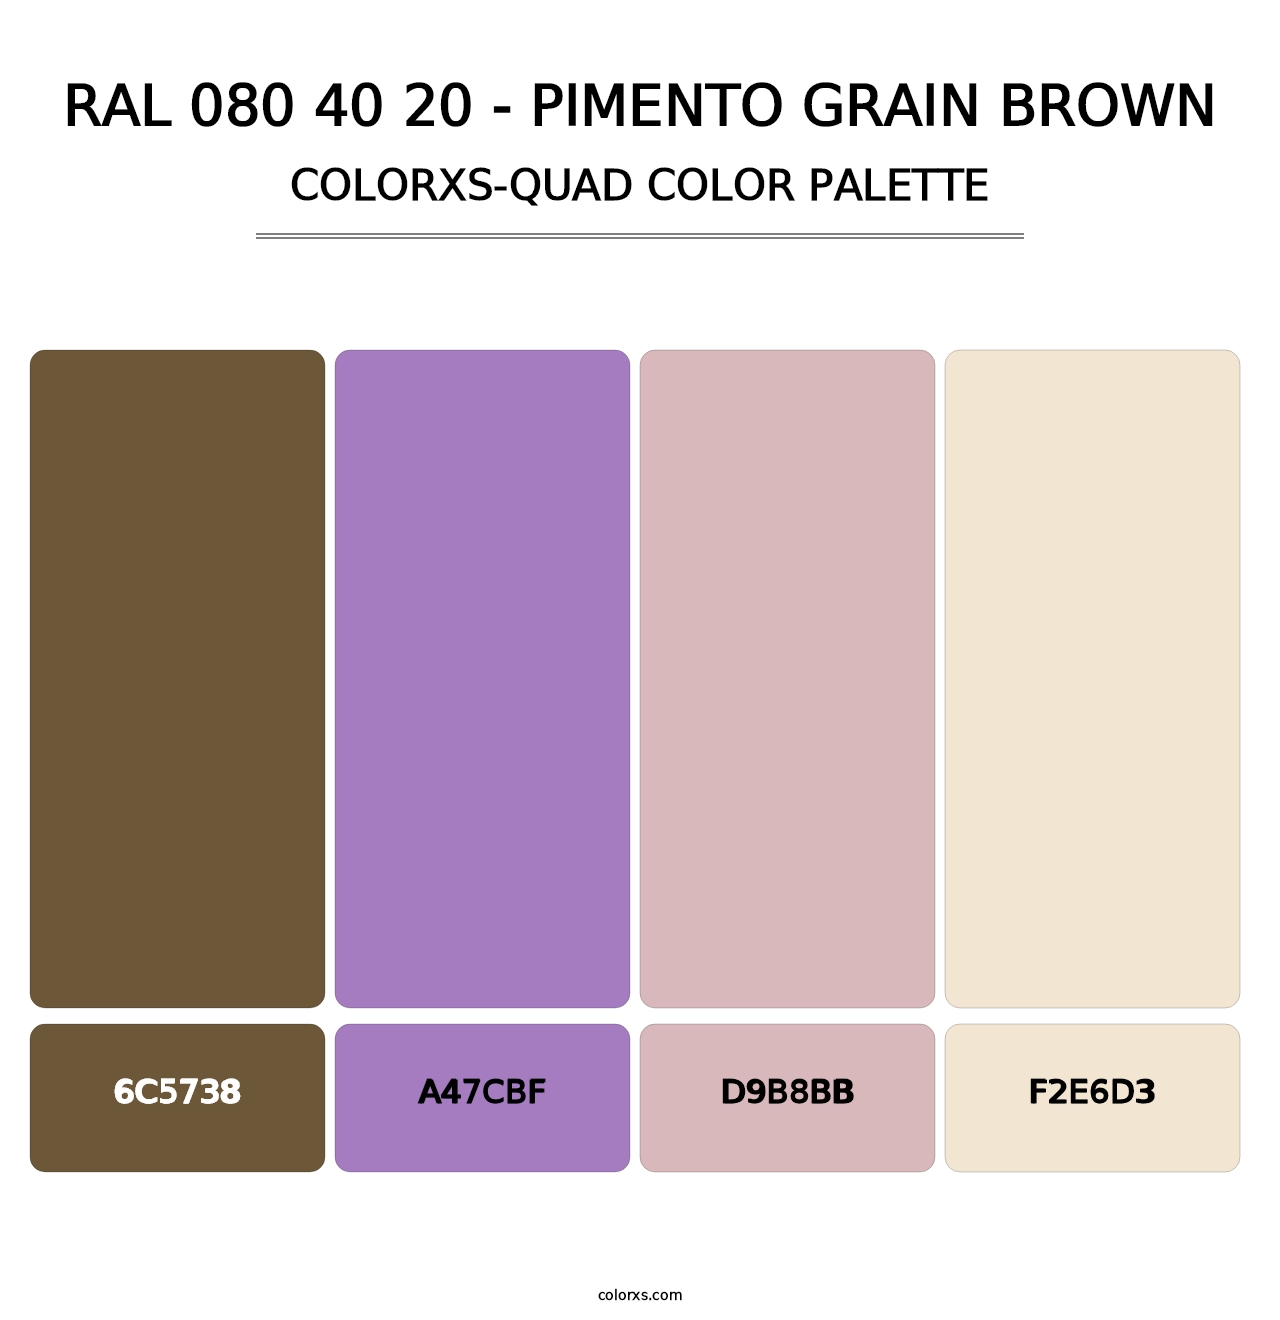 RAL 080 40 20 - Pimento Grain Brown - Colorxs Quad Palette